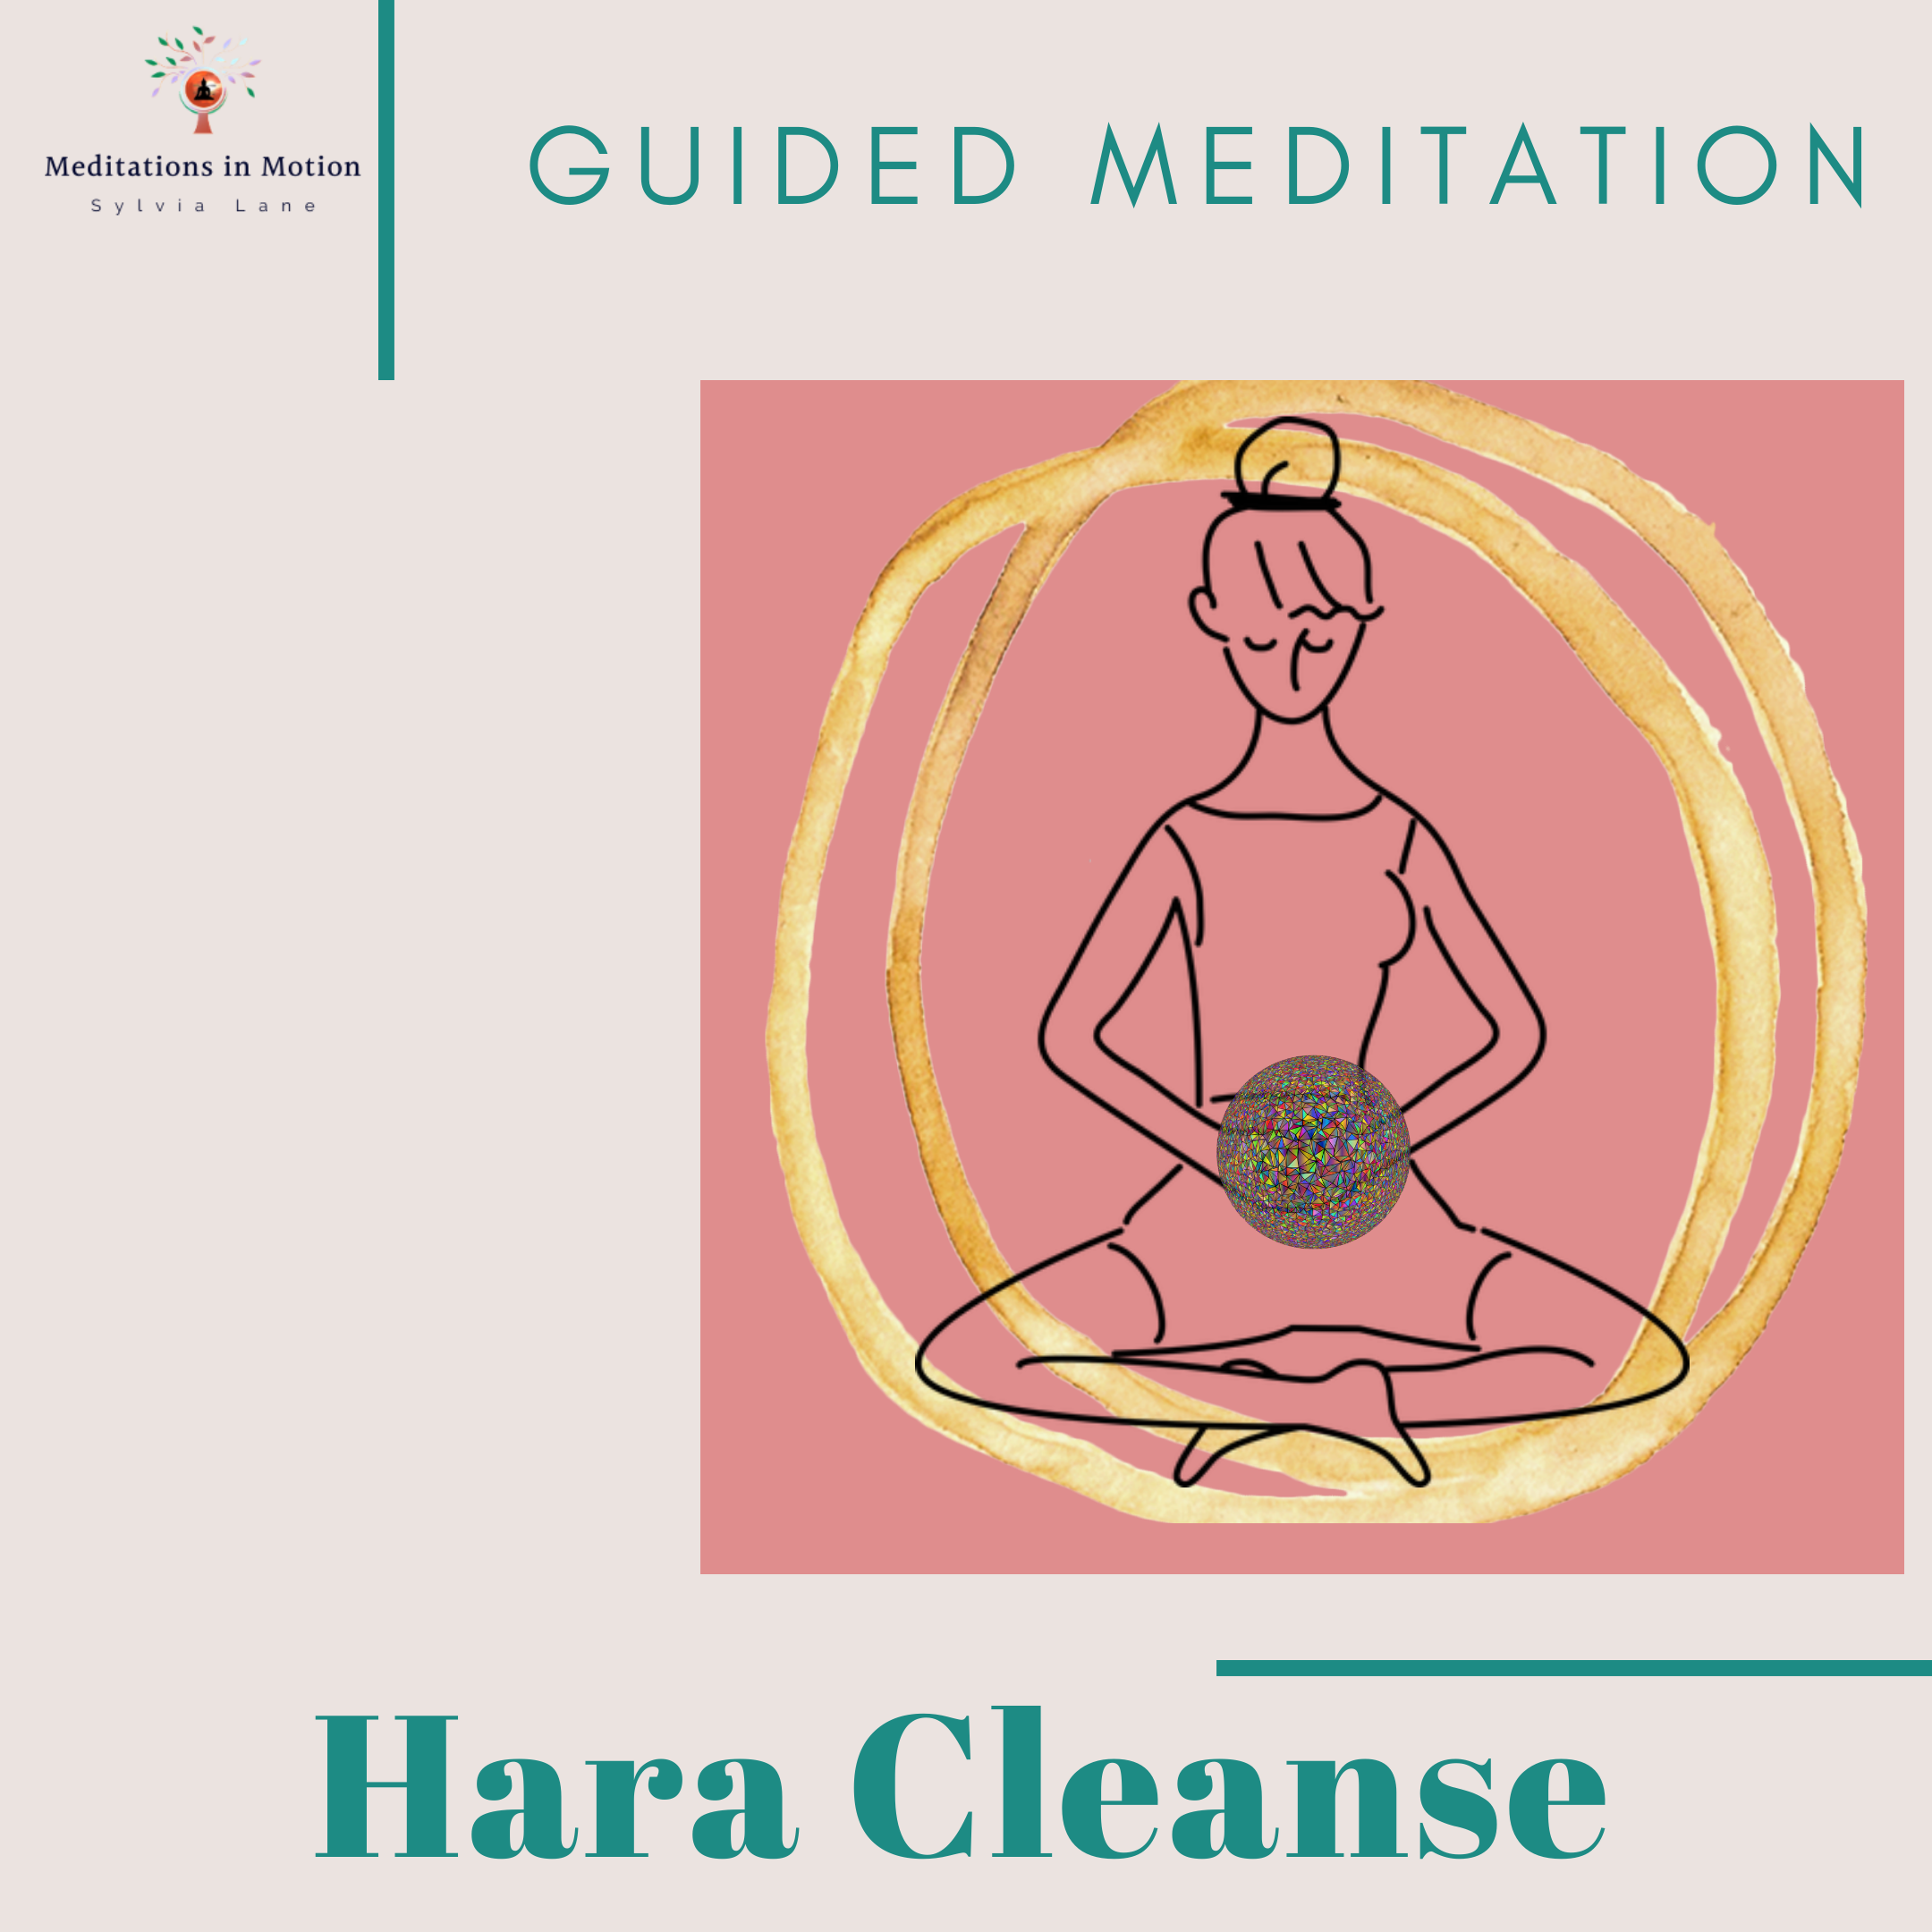 Hara cleanse meditation